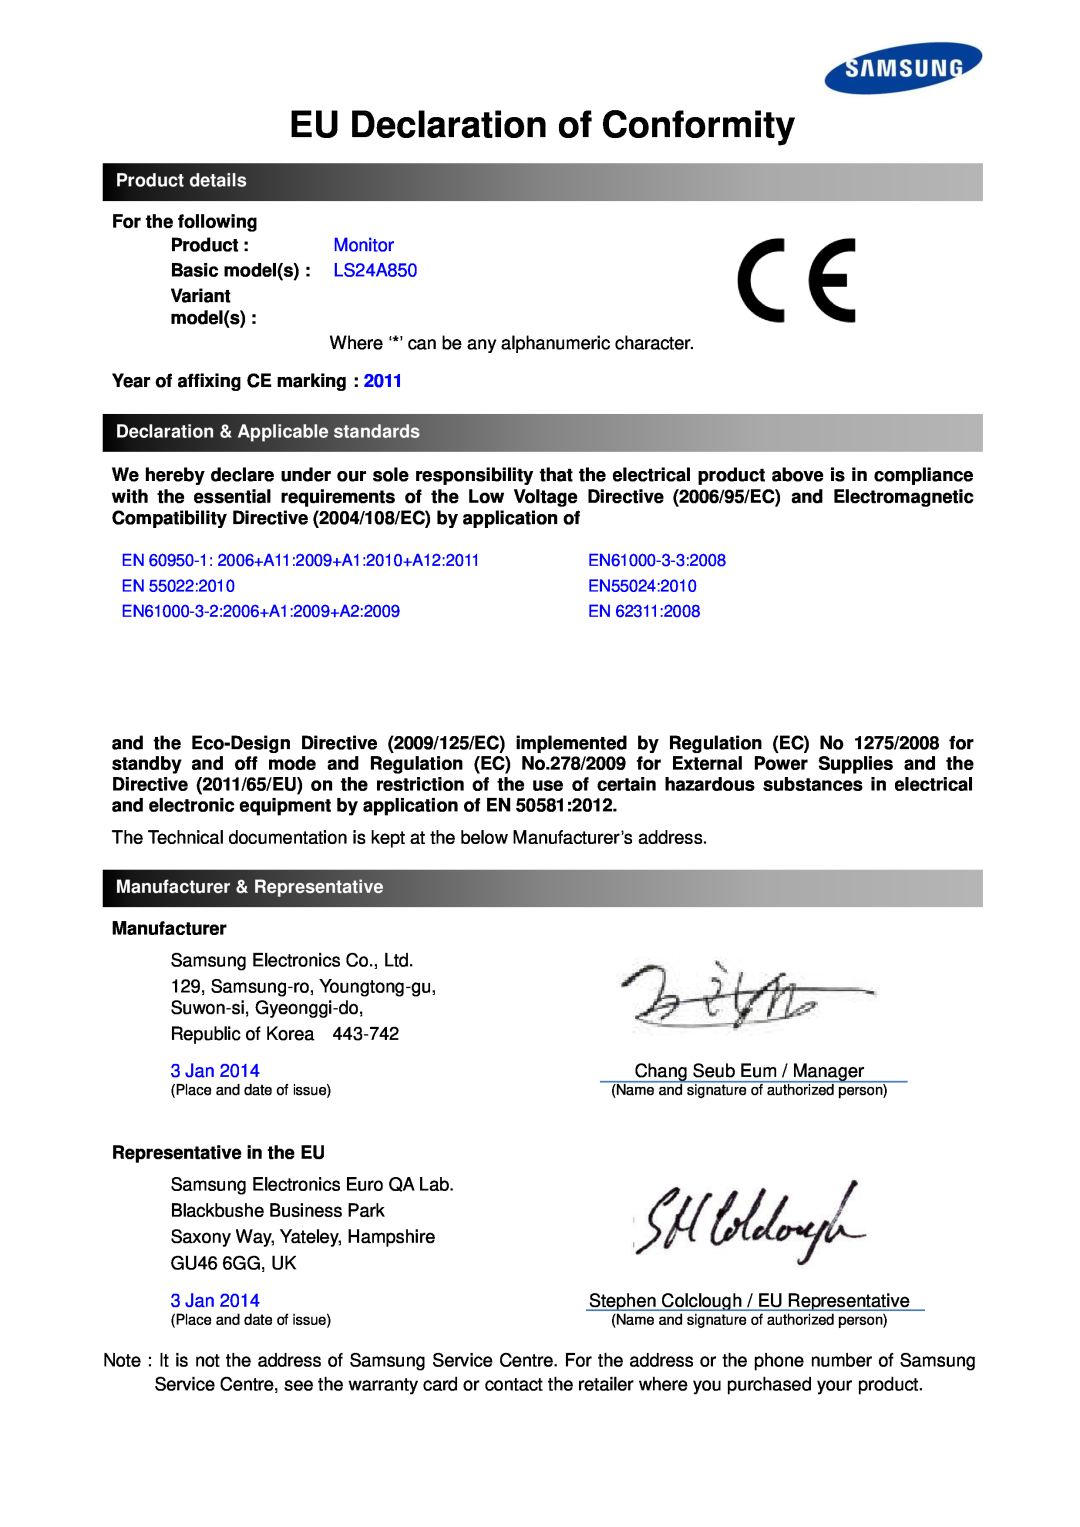 Samsung LS24A650DS/XJ manual EU Declaration of Conformity, Product details, Declaration & Applicable standards, 3 Jan 